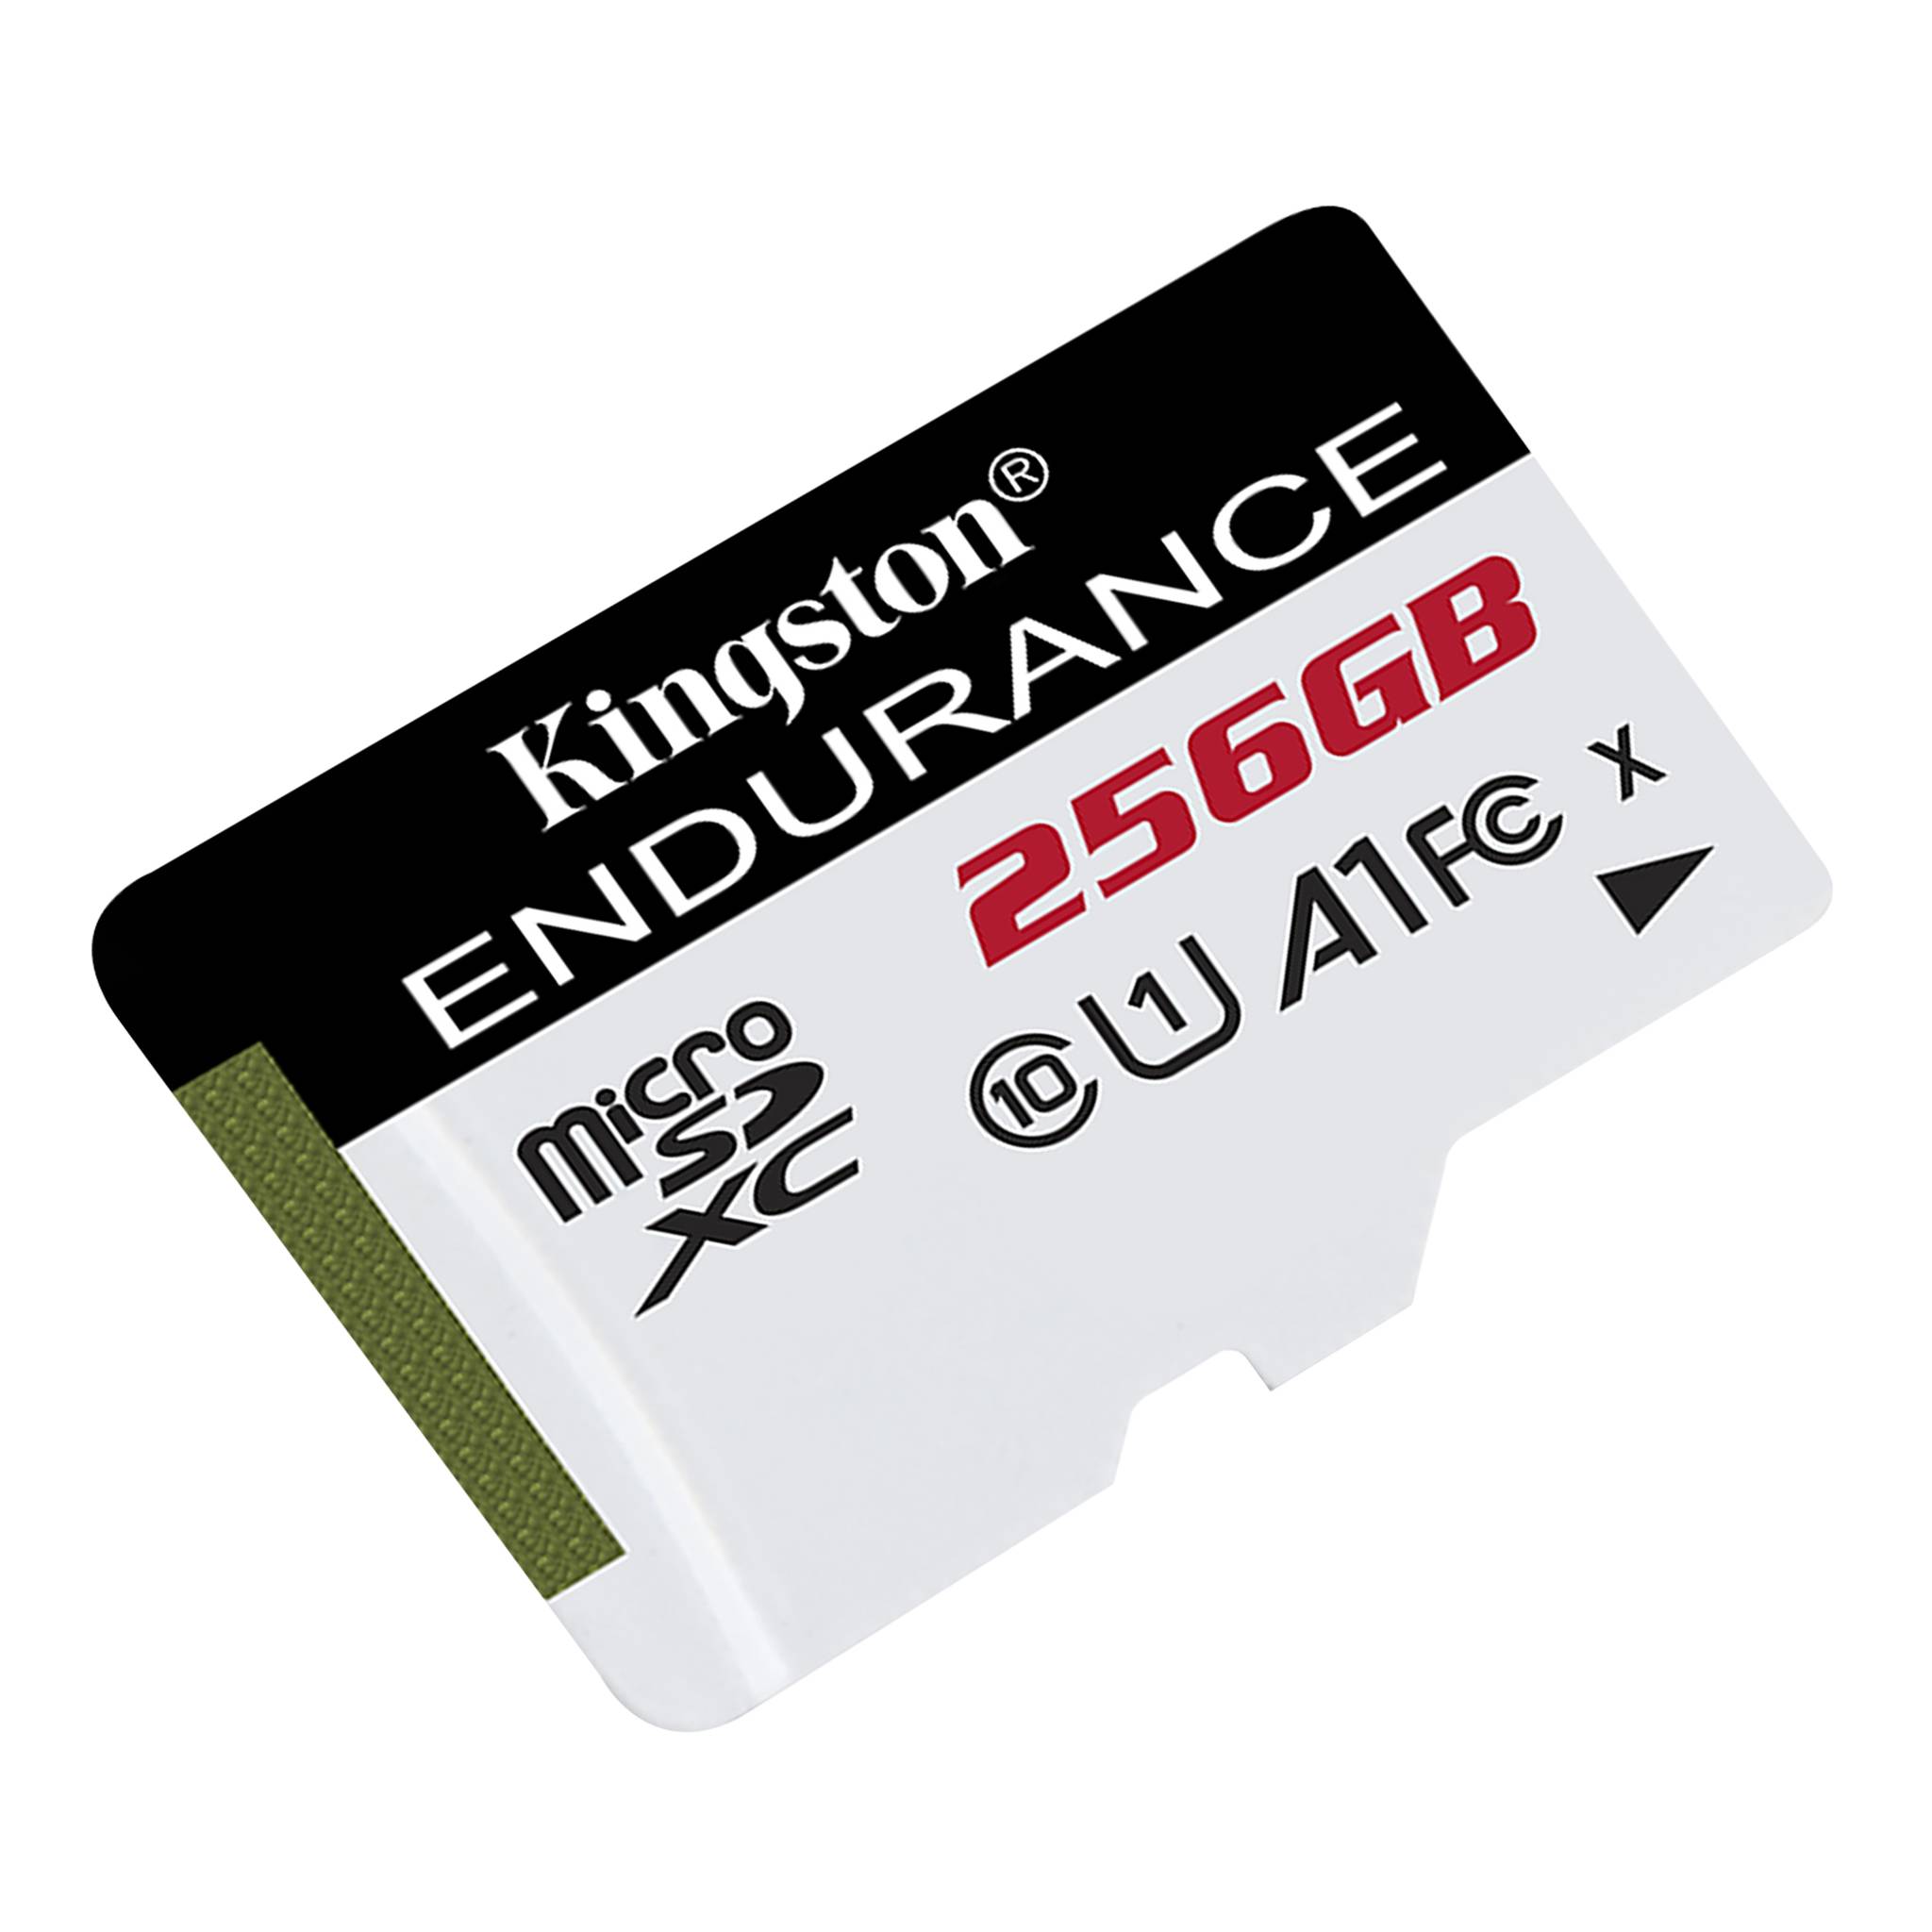 Carte High-Endurance microSD pour caméras de sécurité